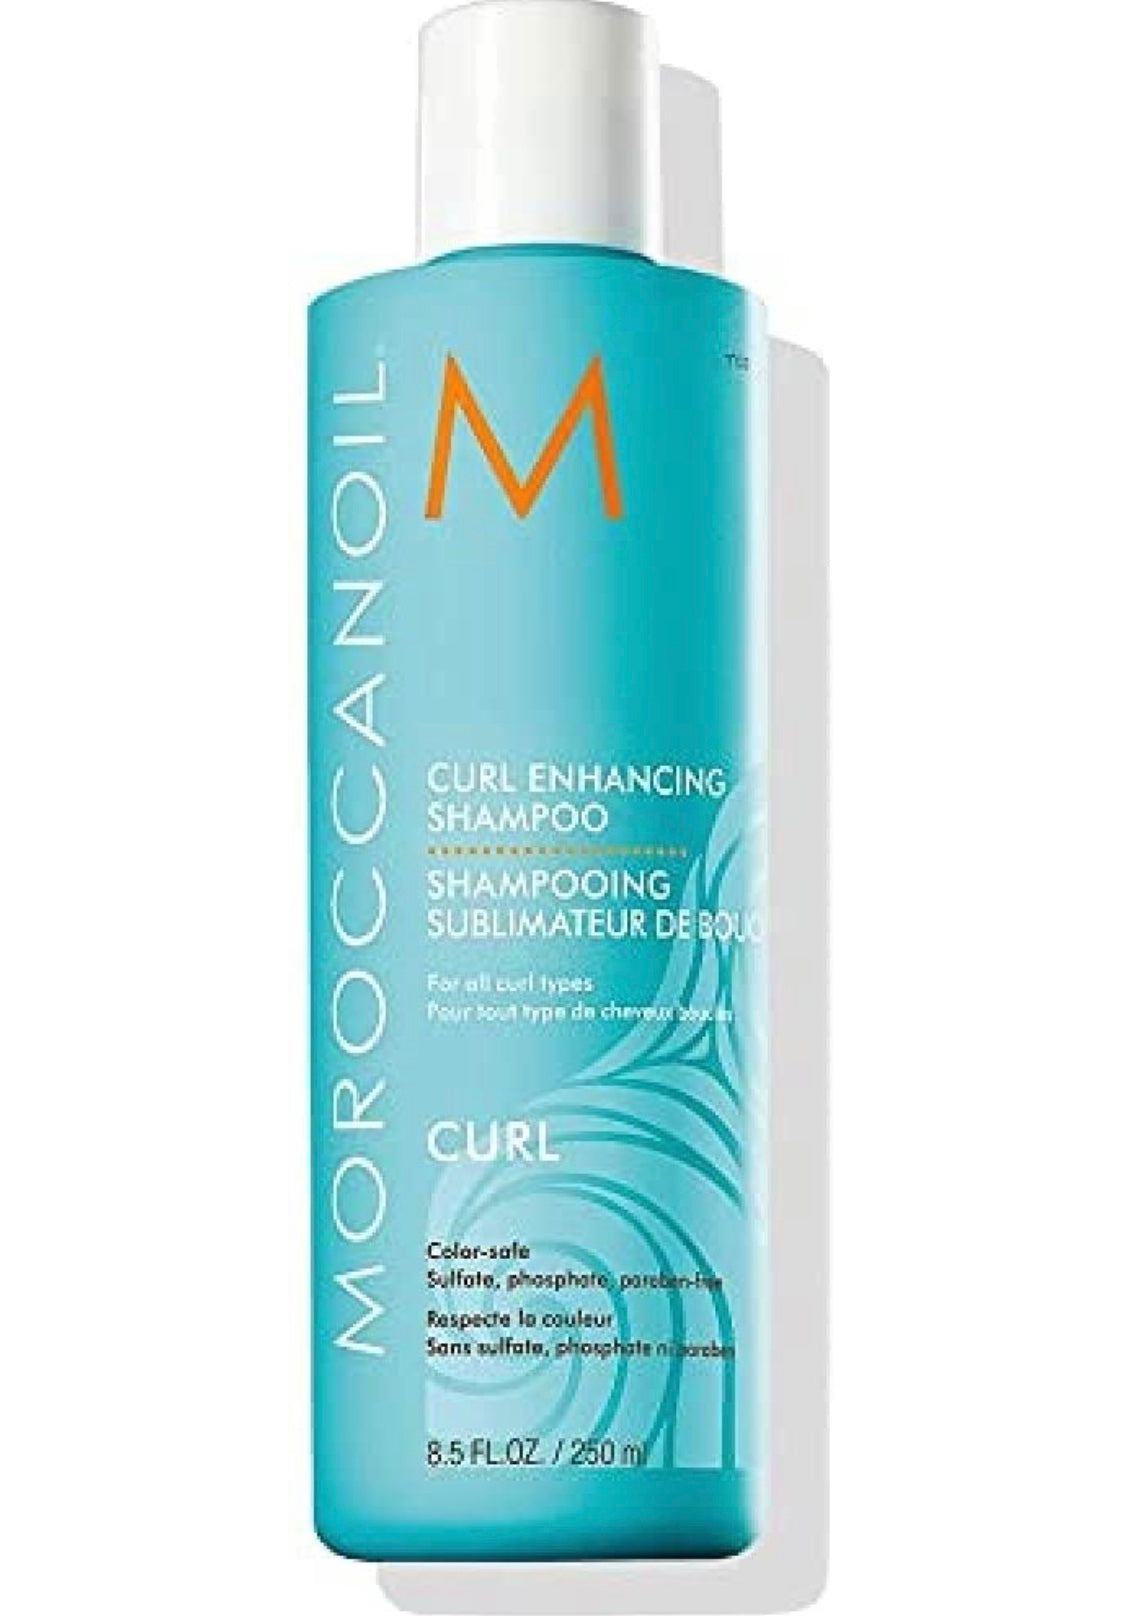 Moroccanoil - Curl enhancing shampoo 8.5 fl. oz./ 250 ml